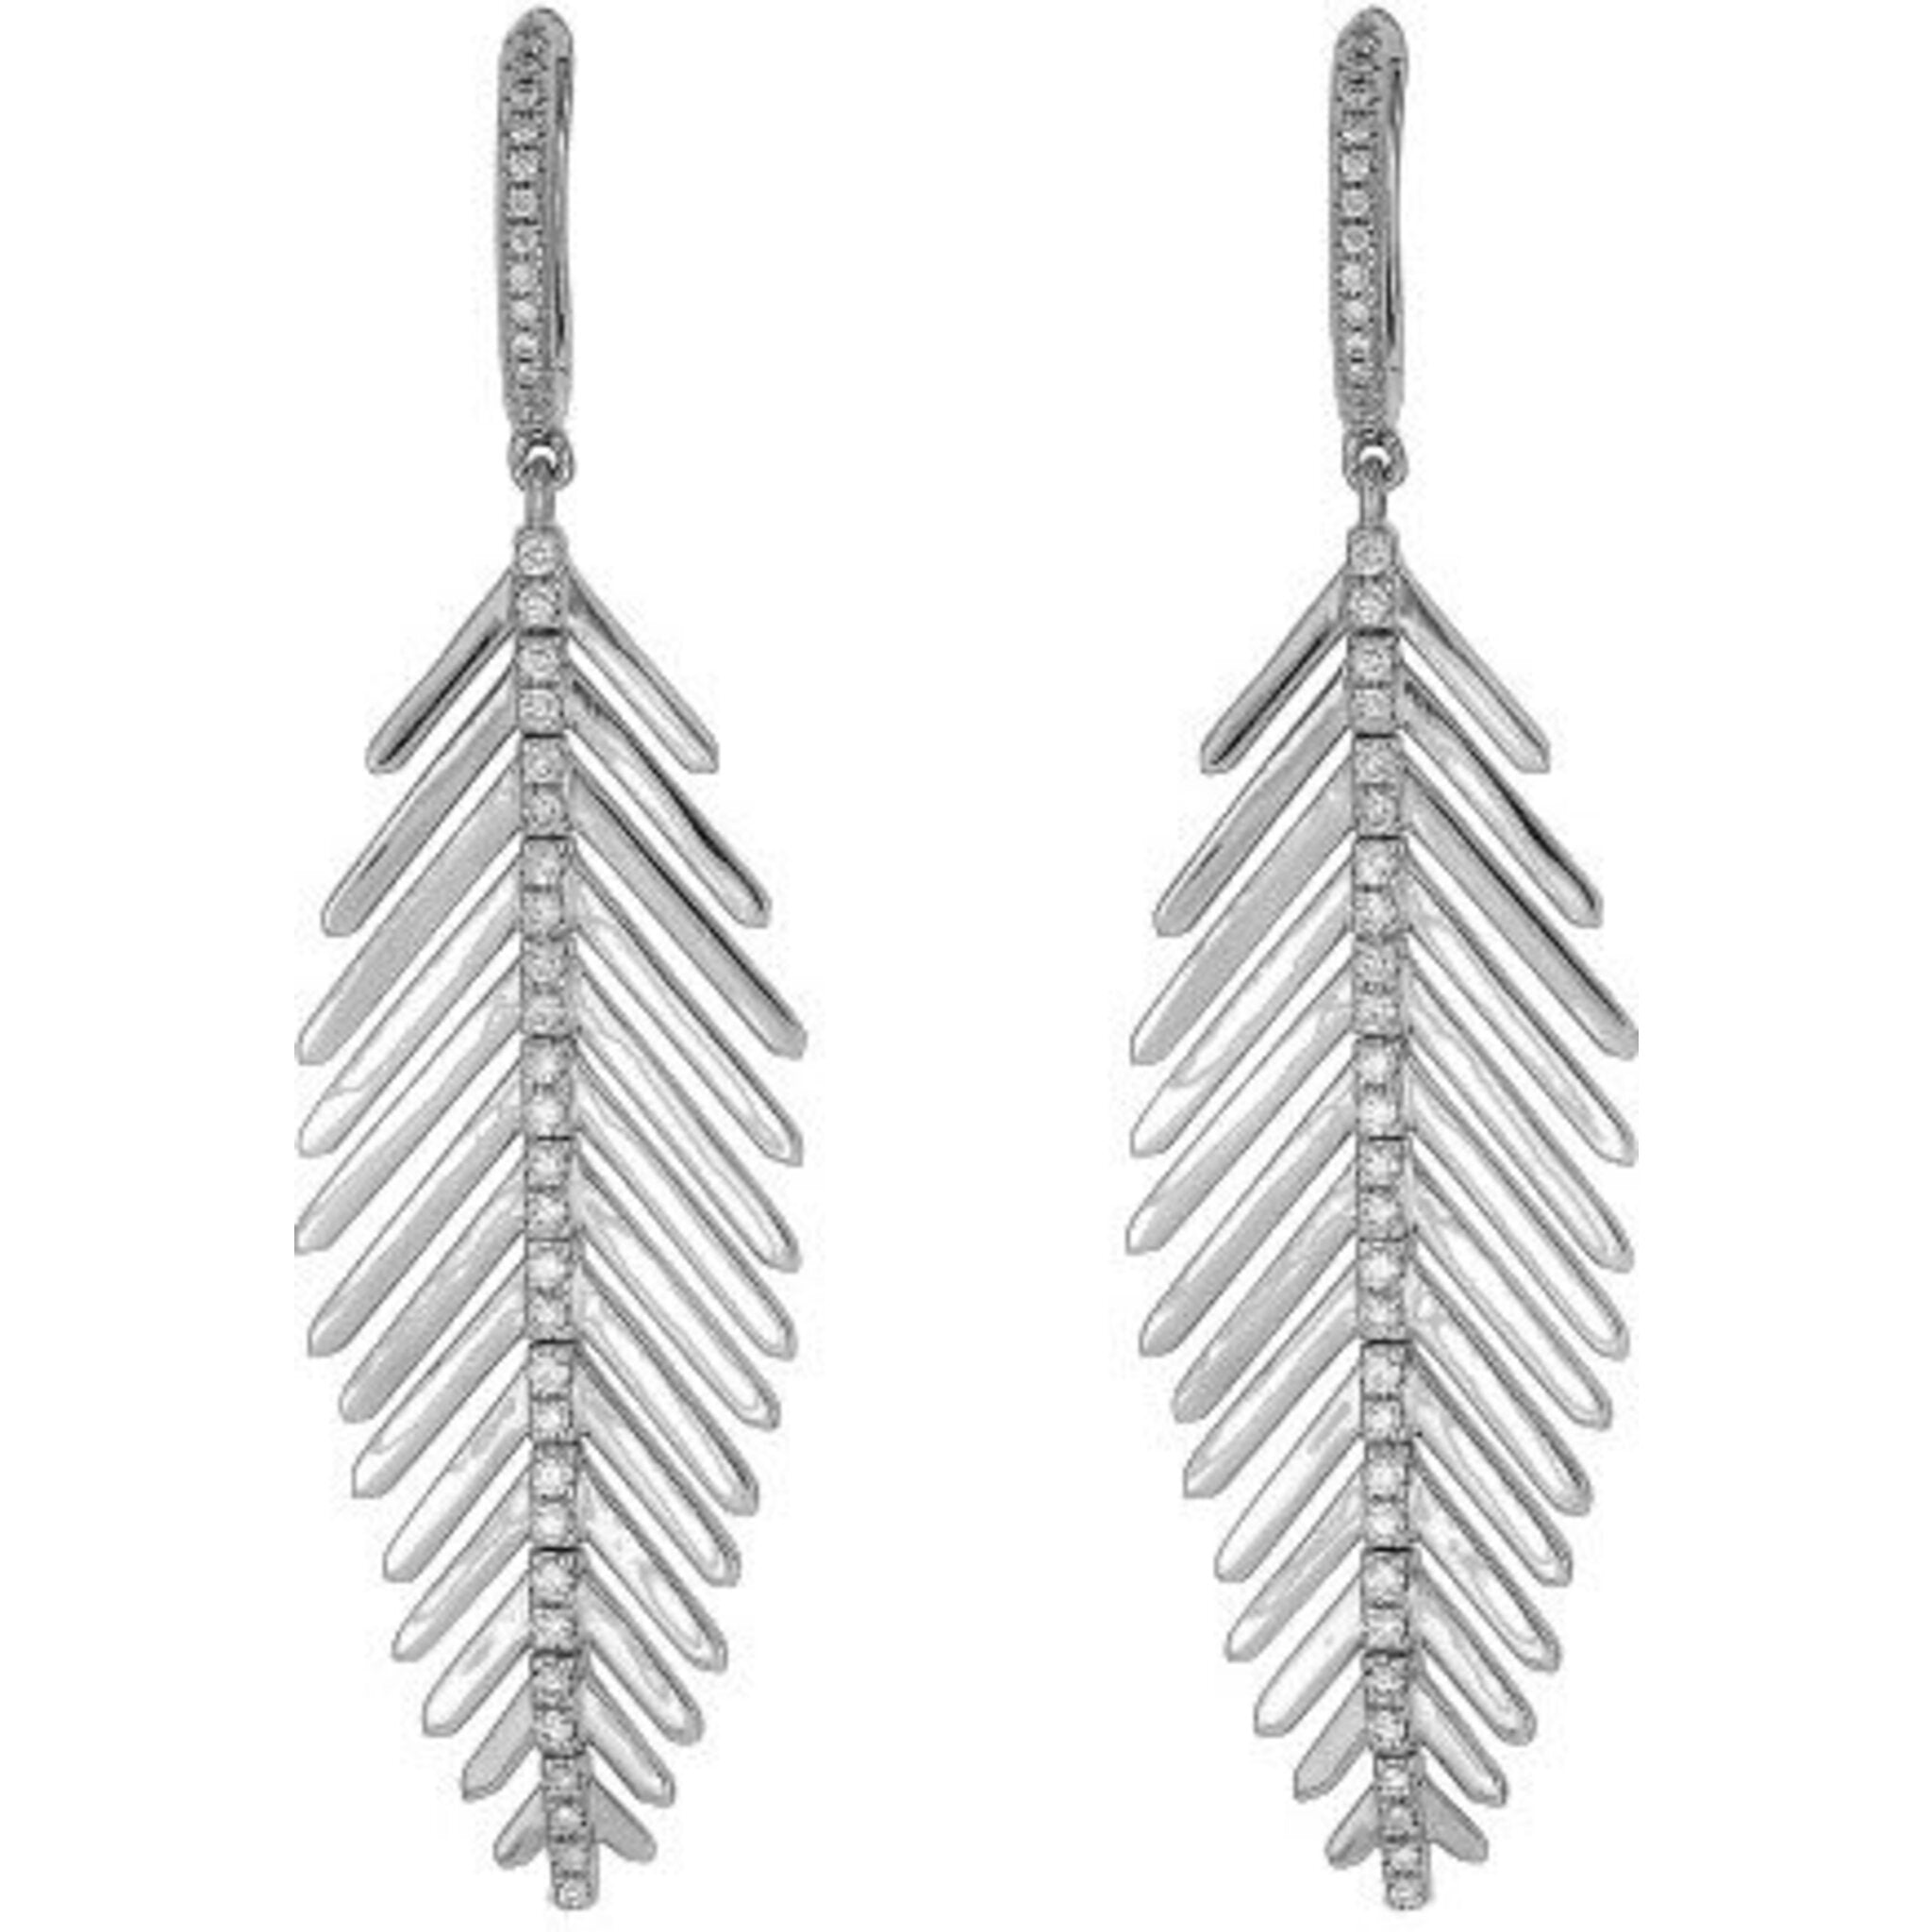 Piranesi - Short Feather Earrings in White Gold - 18K White Gold